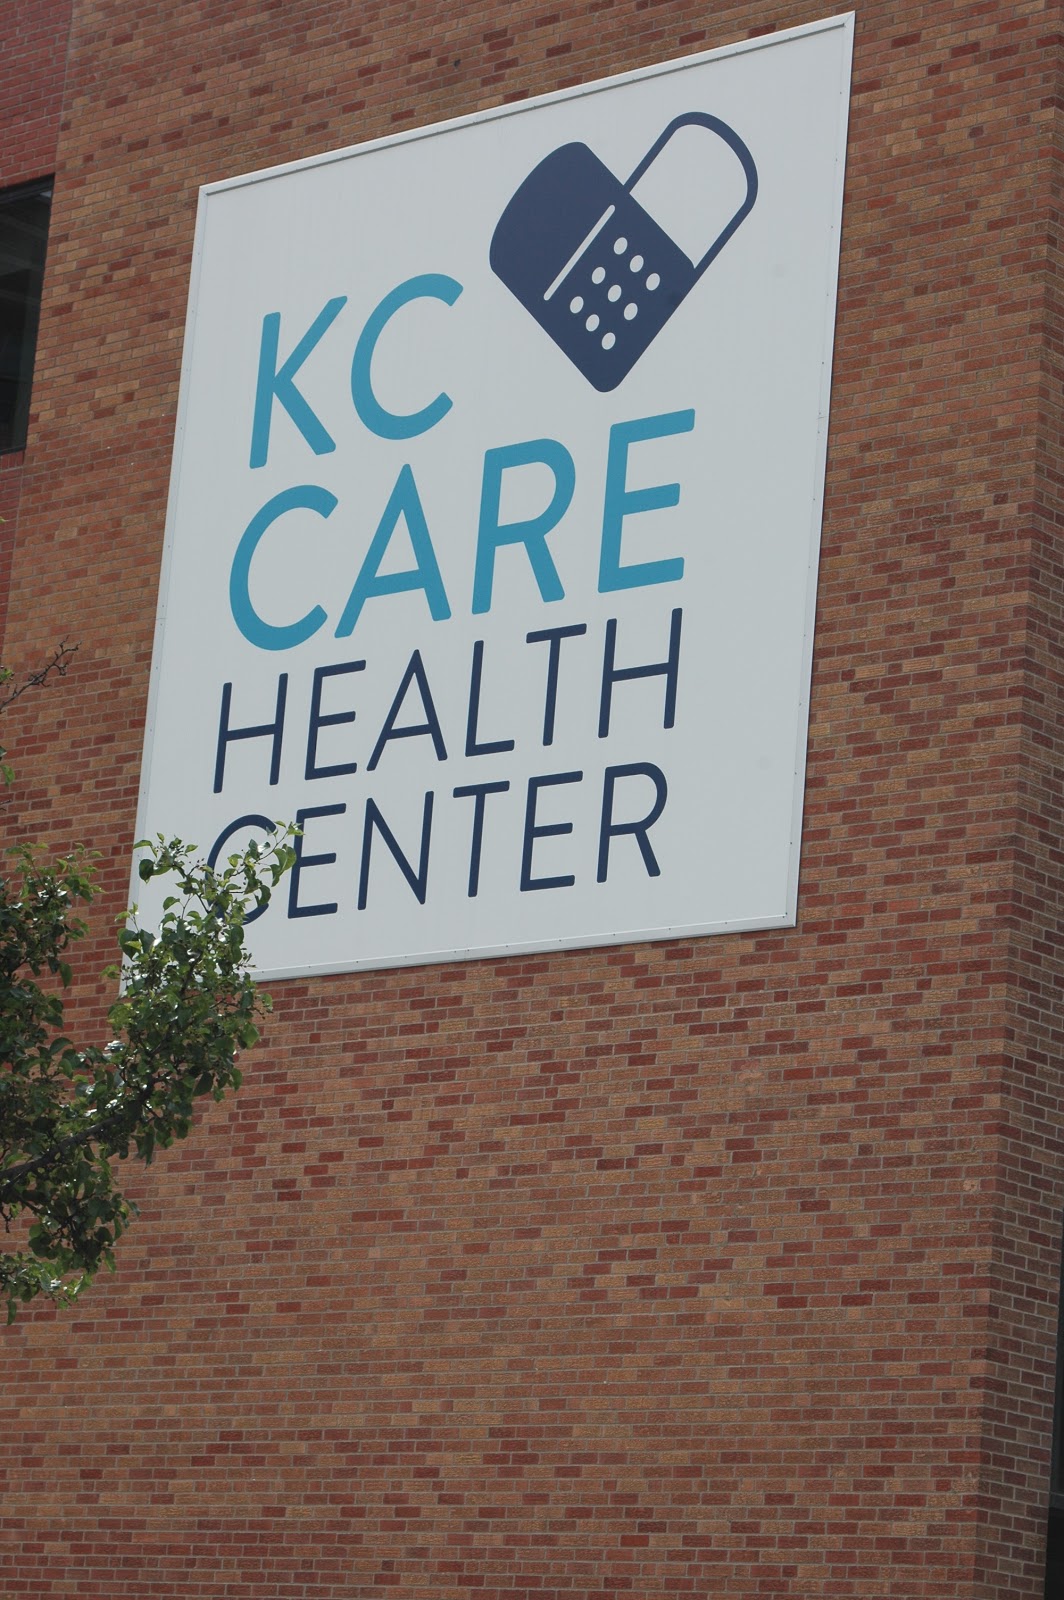 KC CARE Health Center